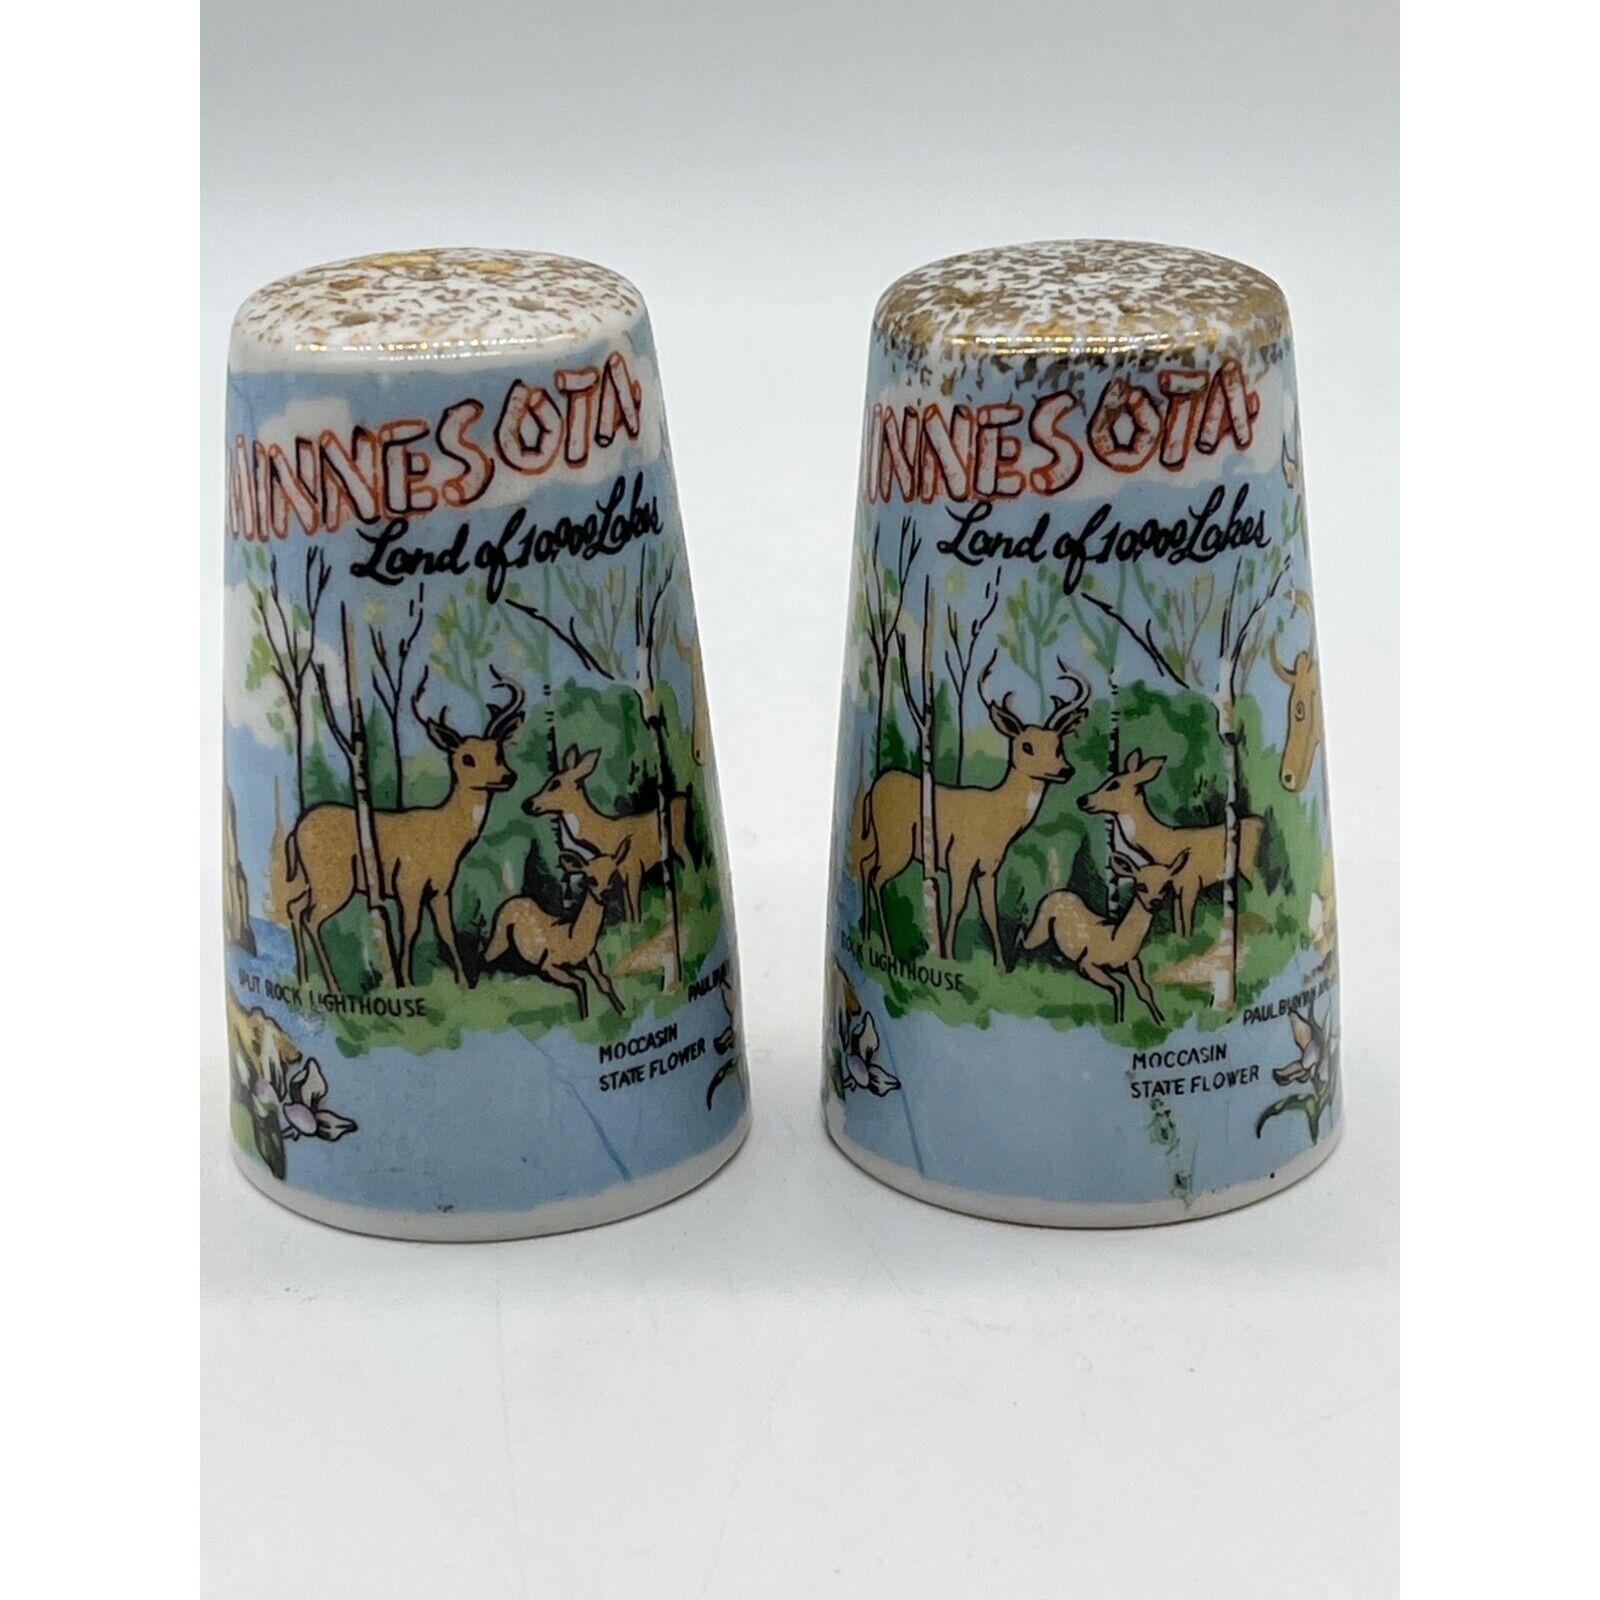 Vintage Minnesota Souvenir Salt and Pepper Shakers by Thrifco Ceramics Japan